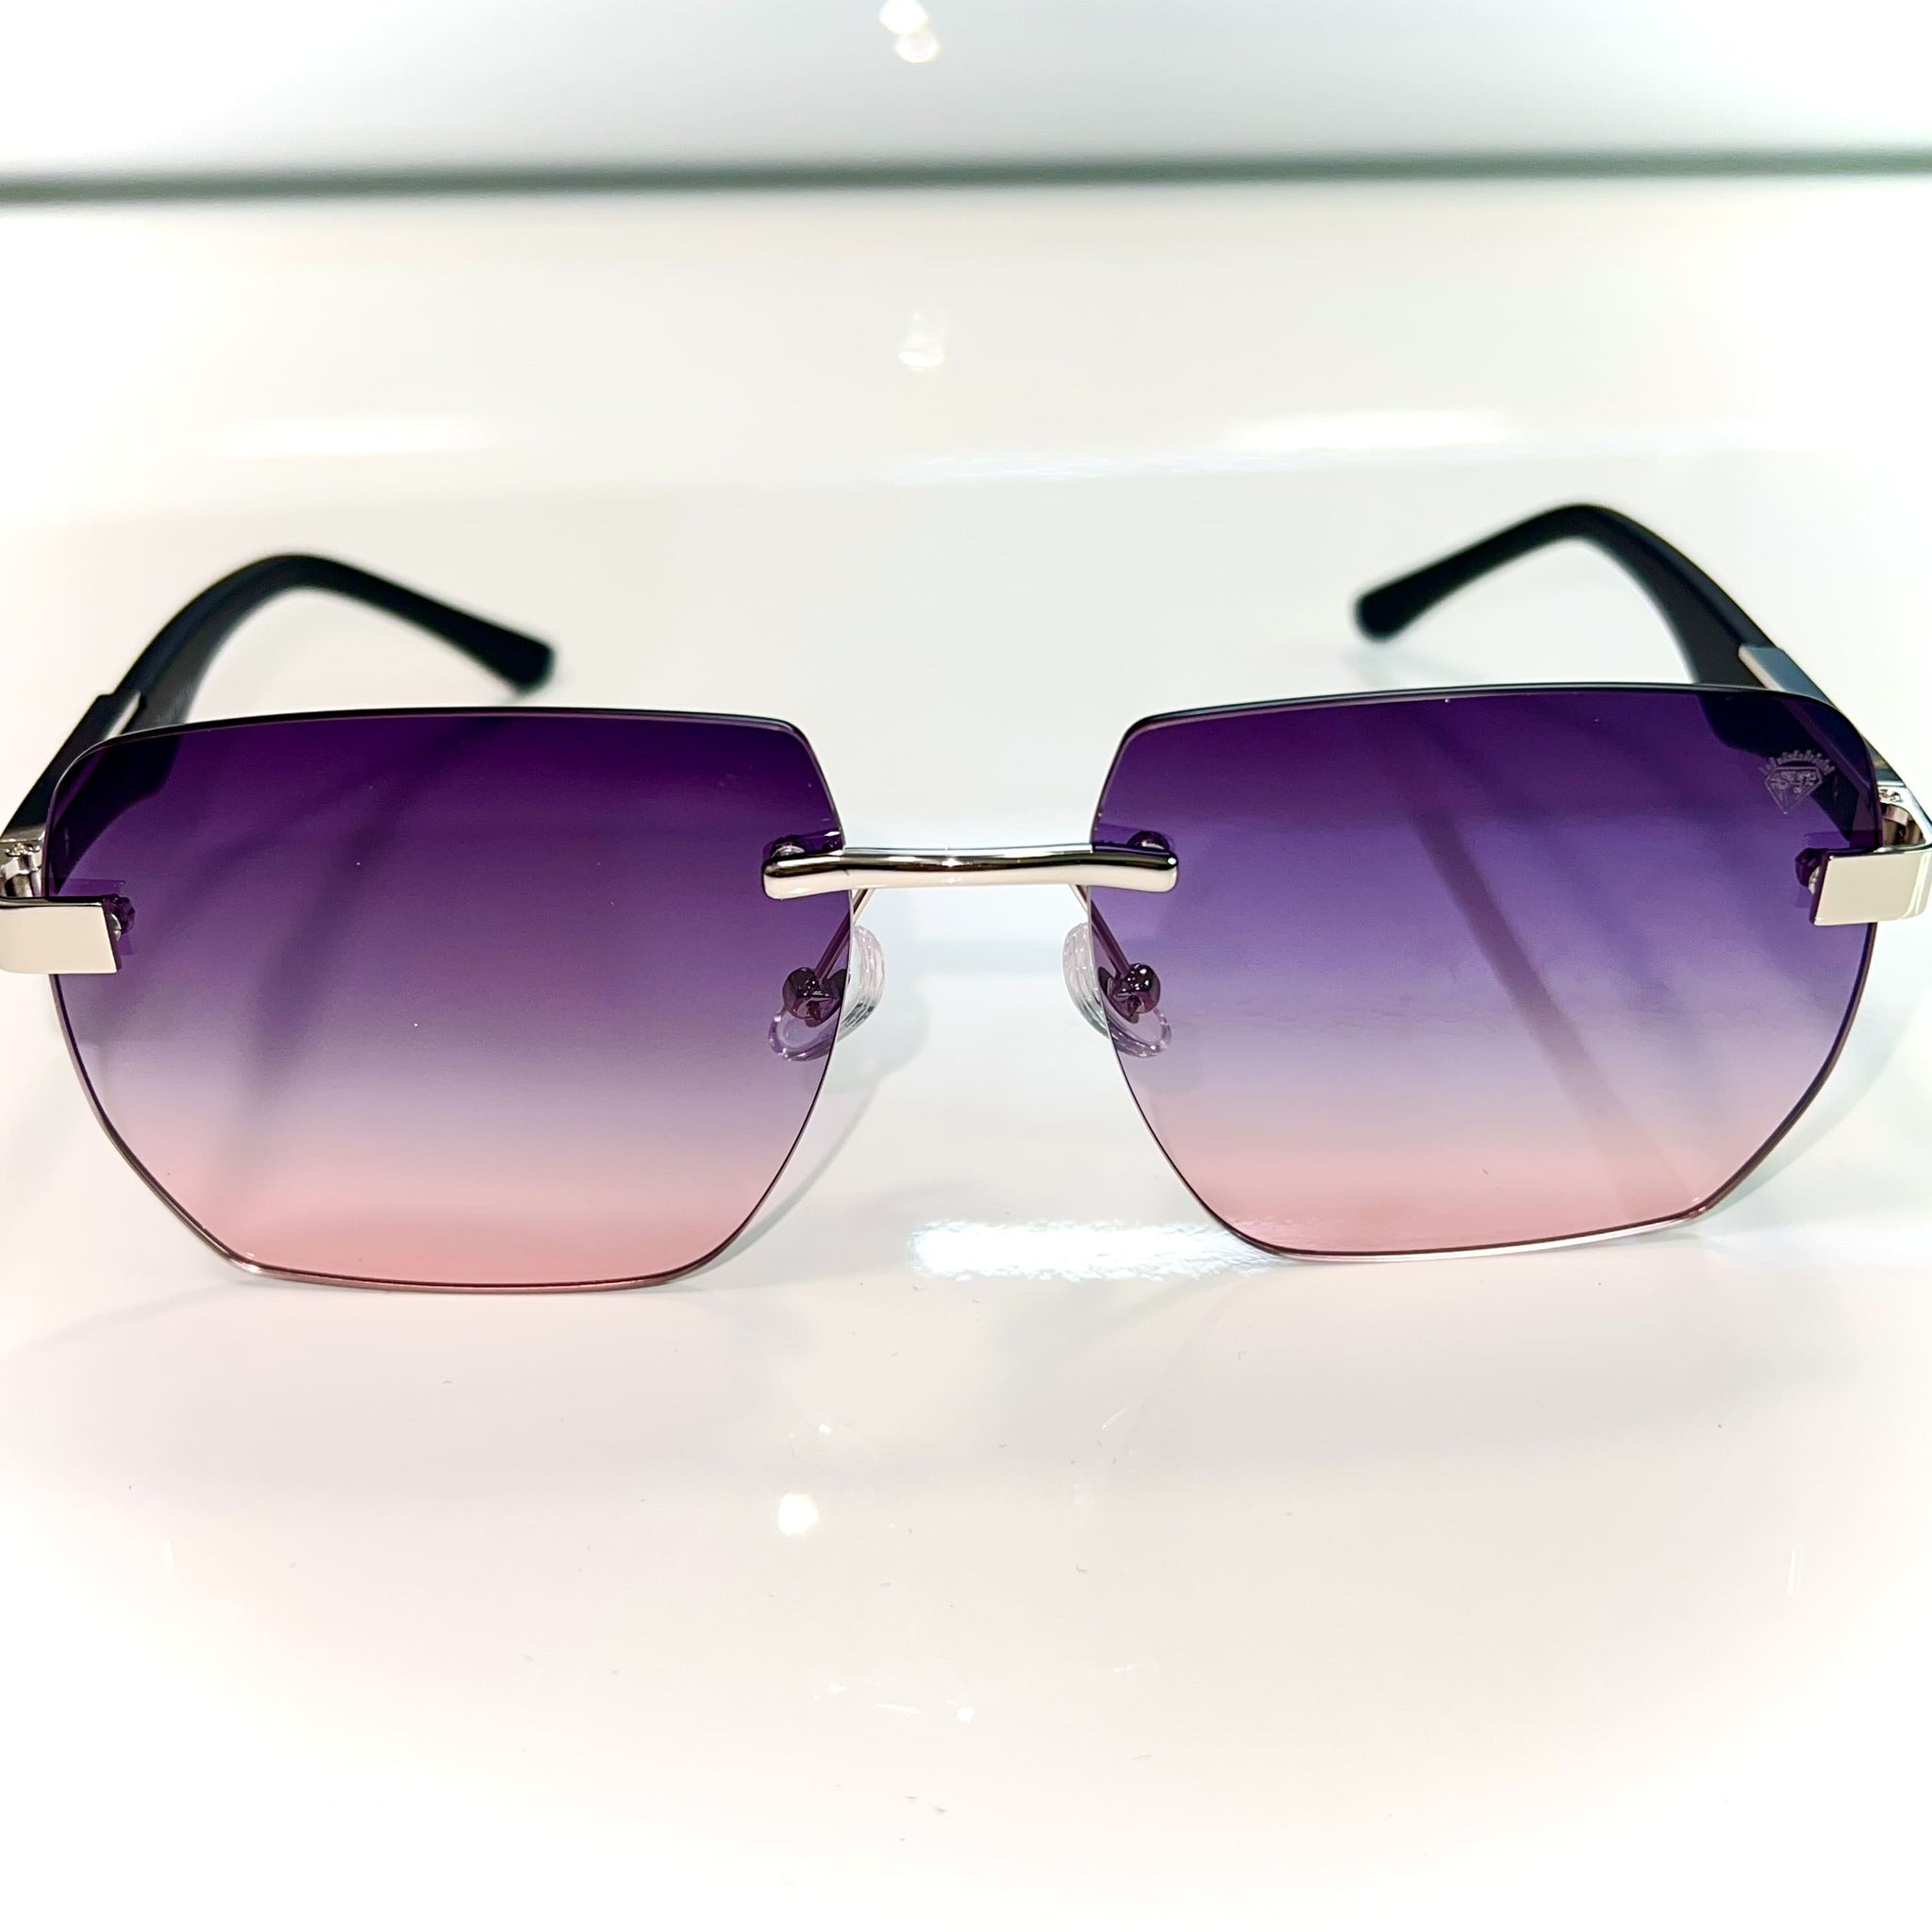 Dubai Glasses - Silver 925 plated / Silicon side - Purple Shade - Sehgal Glasses